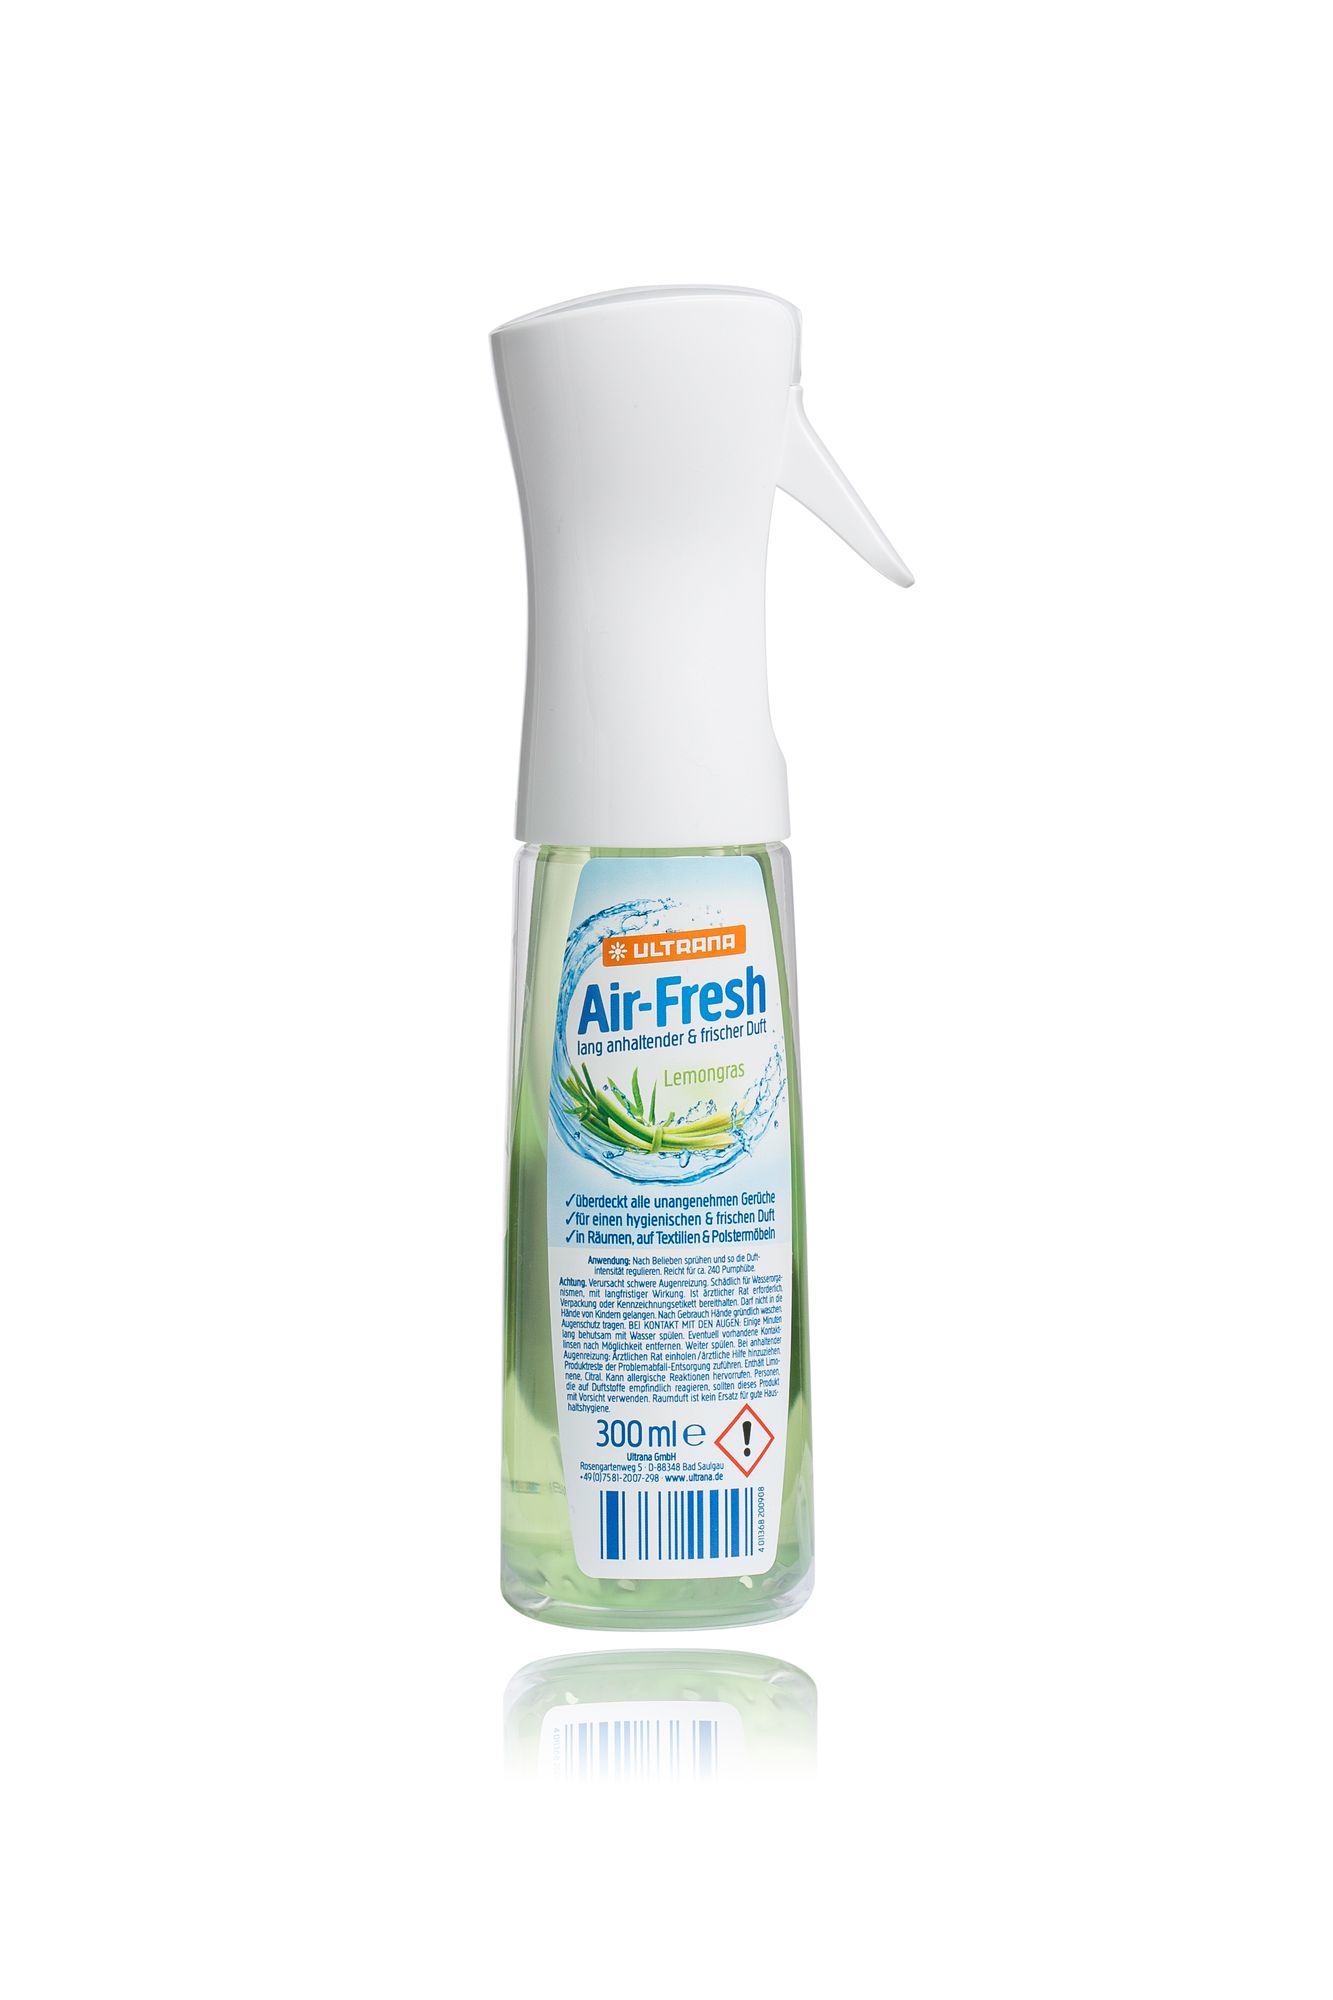 Ultrana Air-Fresh Lemongras Raumduftspray- Textilduftspray- Polstermöbelduftspray 300ml unter Hygiene